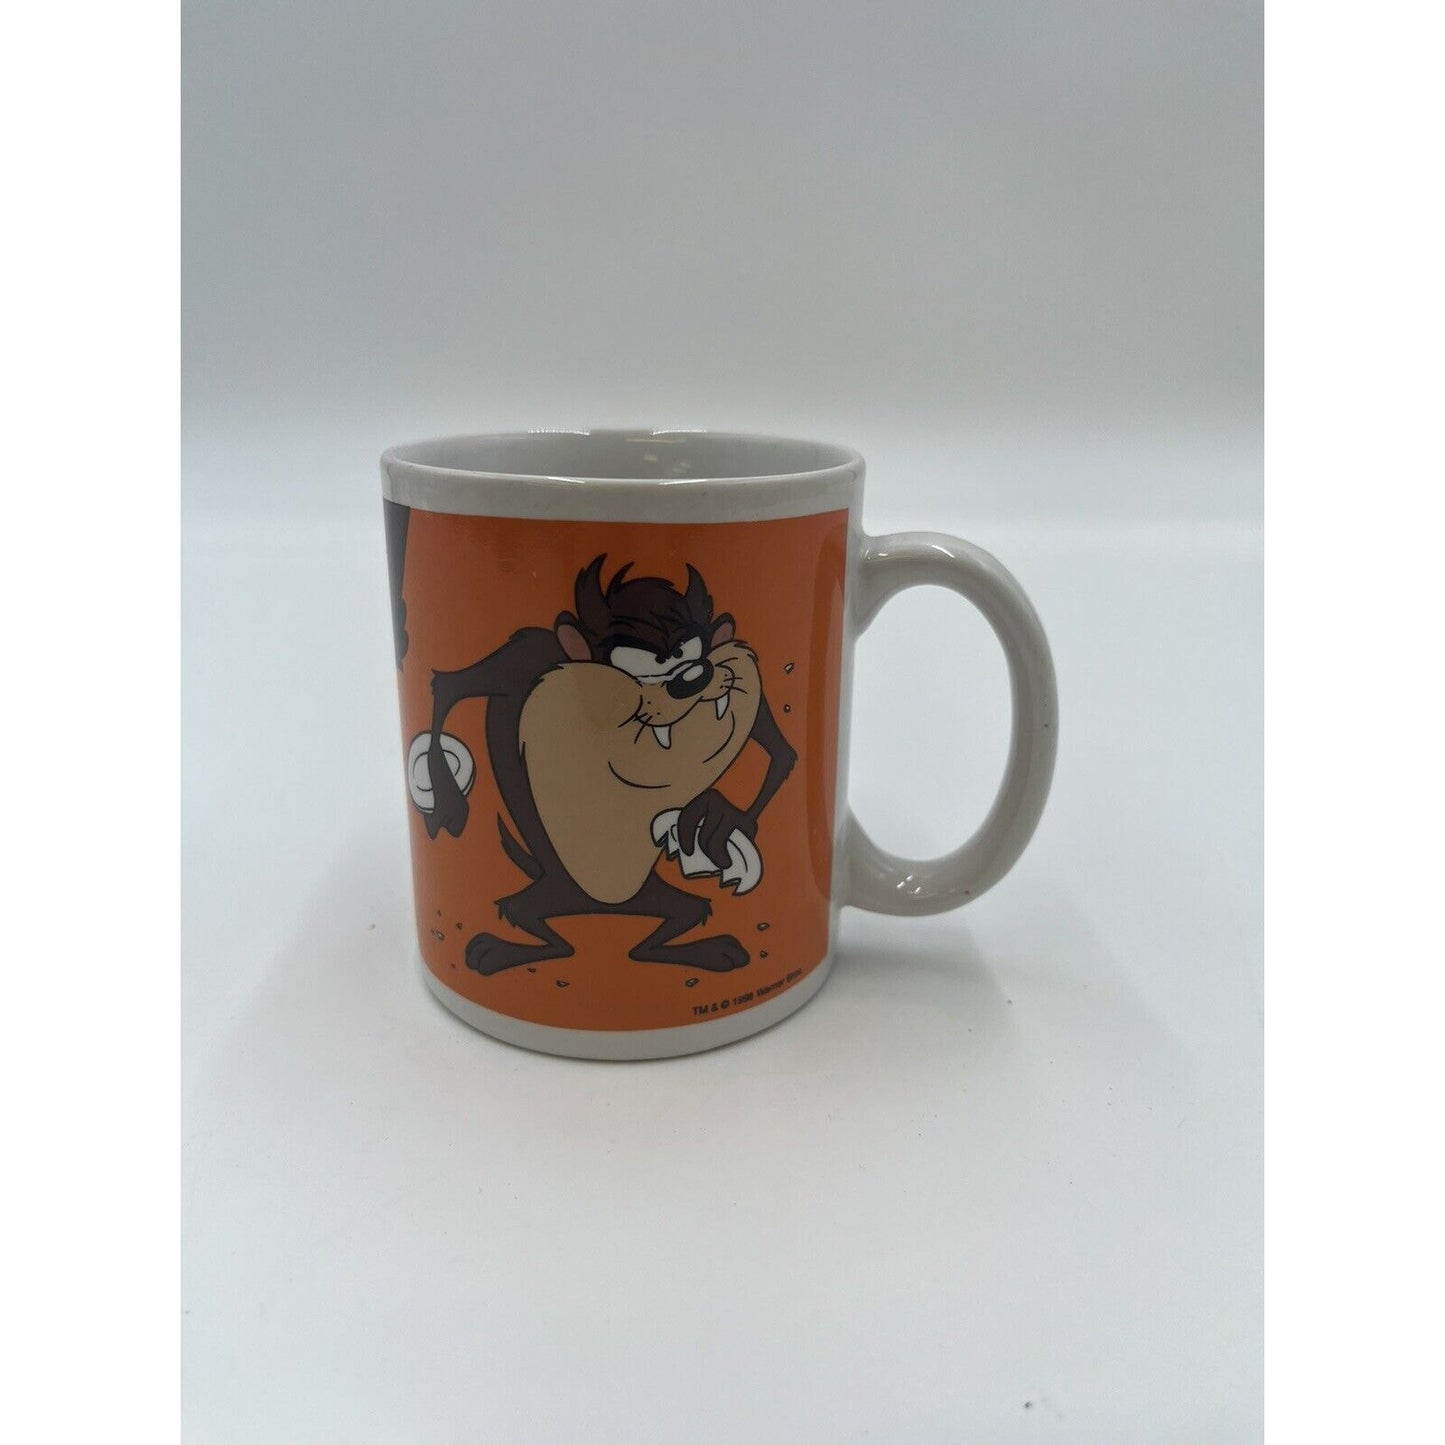 TAZ Coffee Cup Mug Vintage 1998 Warner Bros. Looney Tunes Gibson Tasmanian Devil